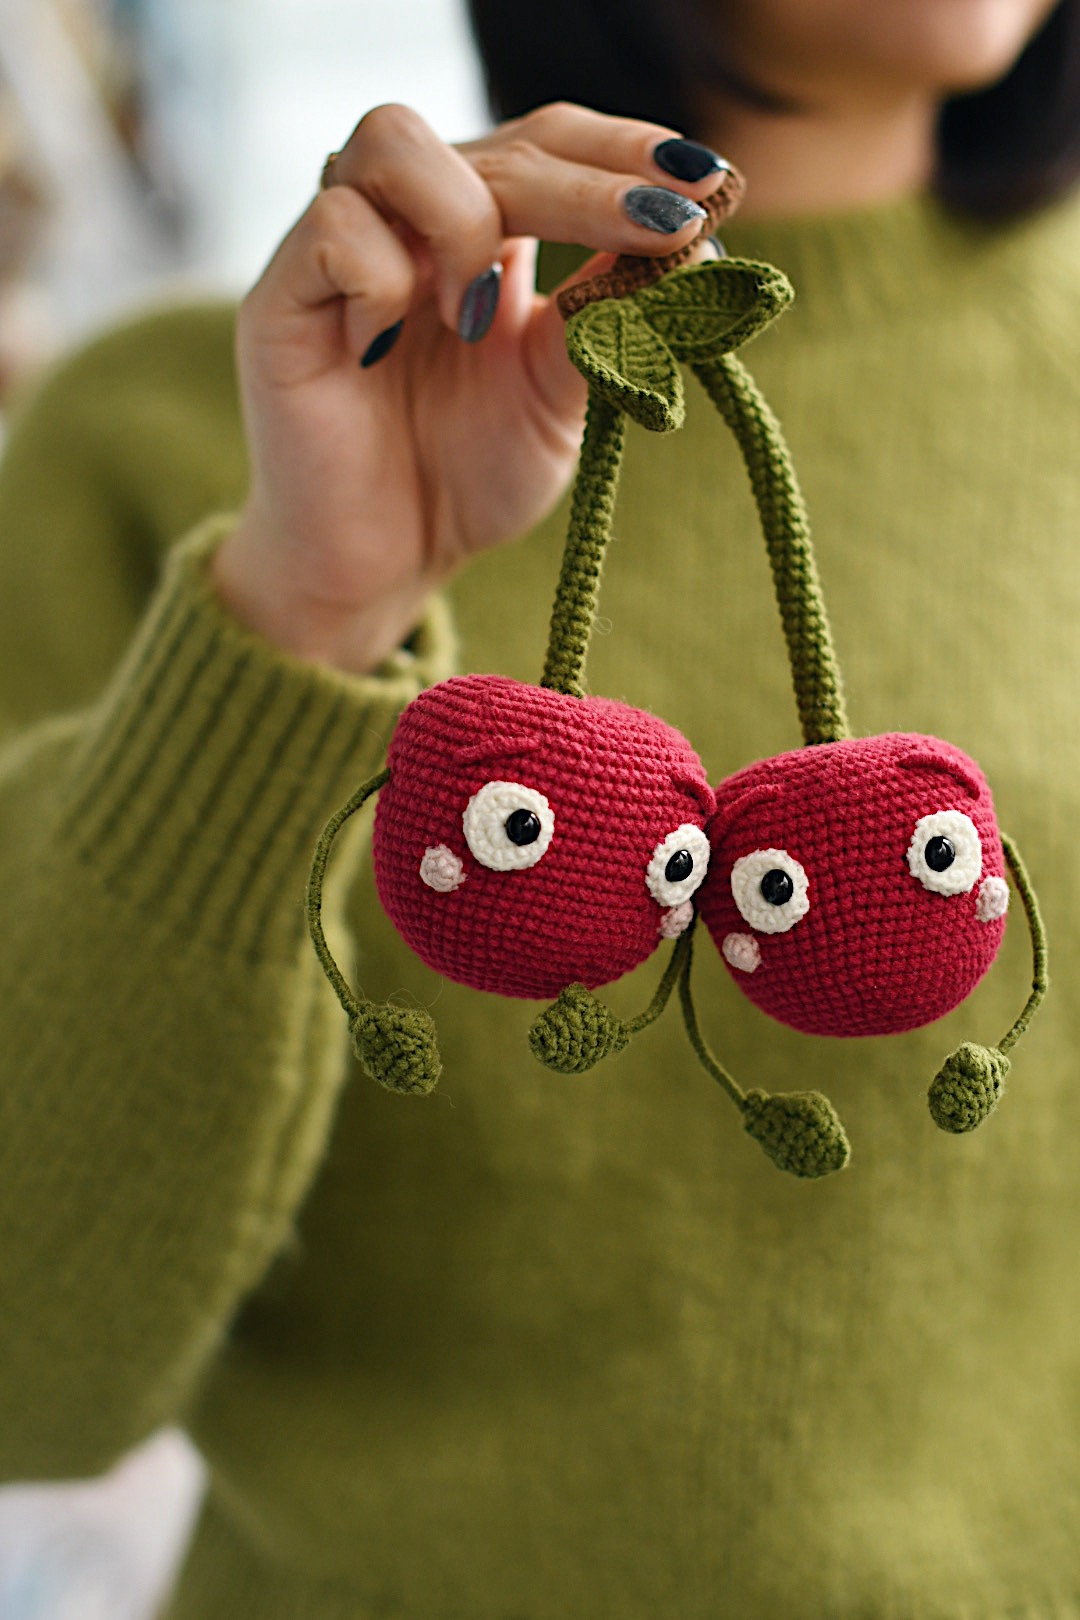 Knitted cherry keychain